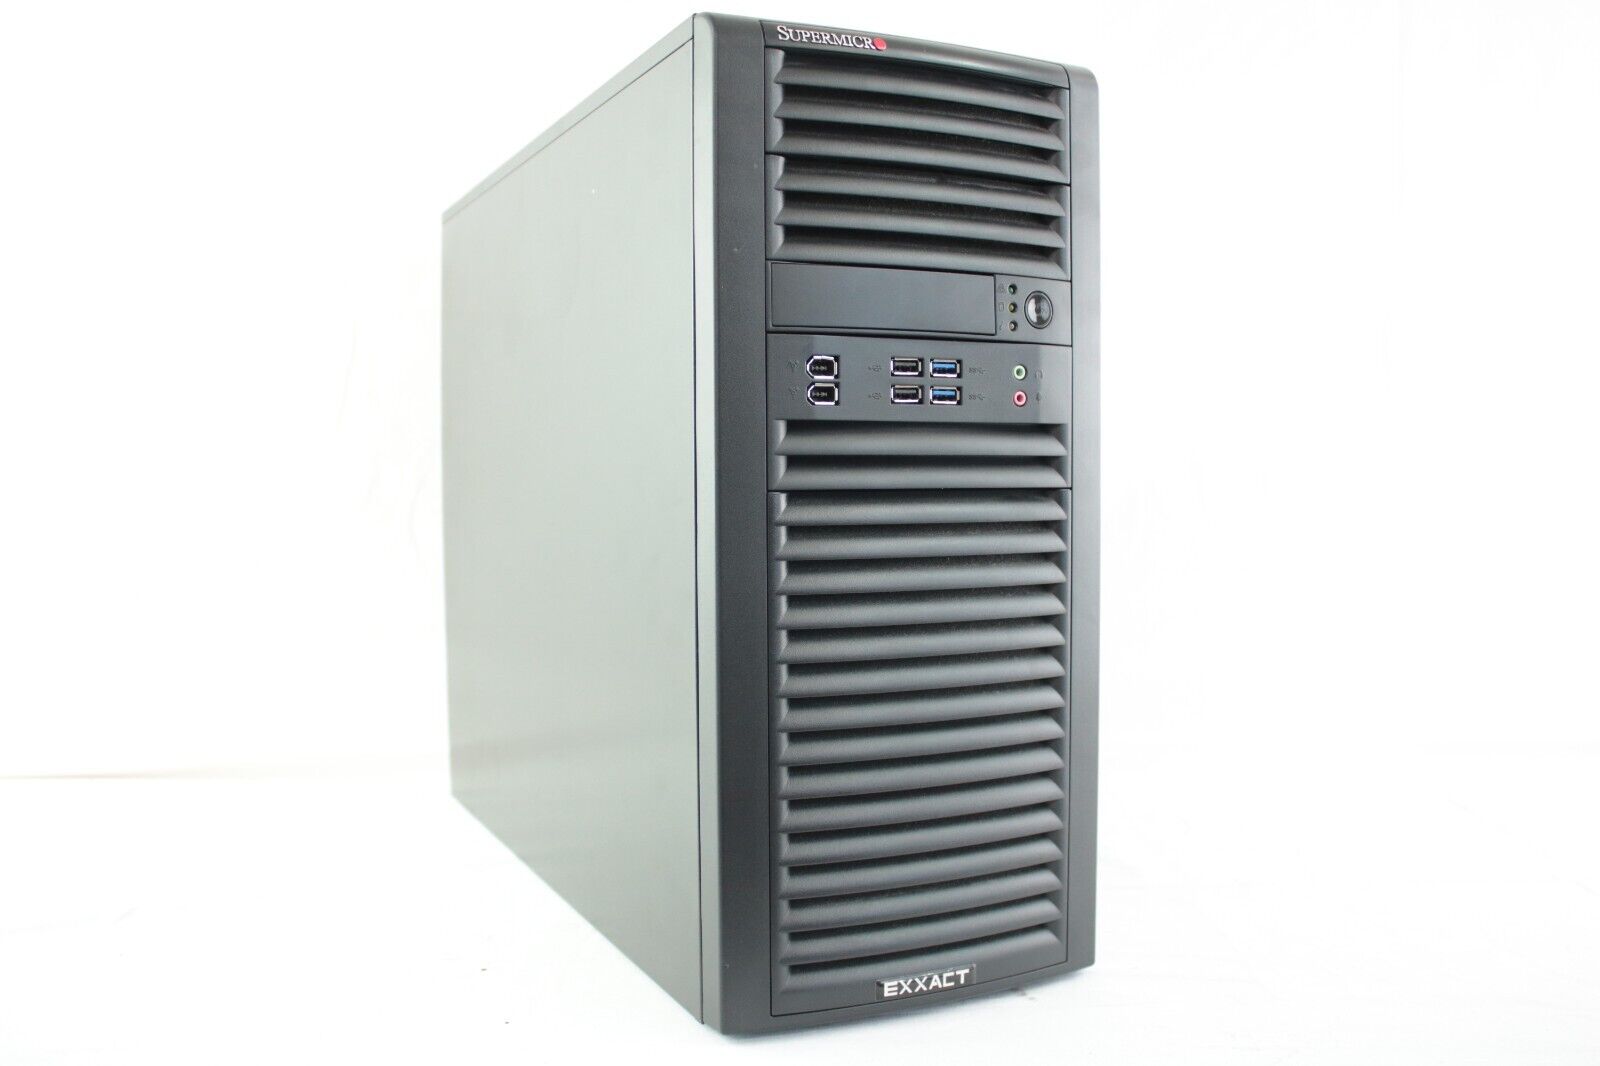 SuperMicro Server Tower w/ 2x Intel Xeon E5-2670 v2 CPU, 64GB RAM, No HDD or OS